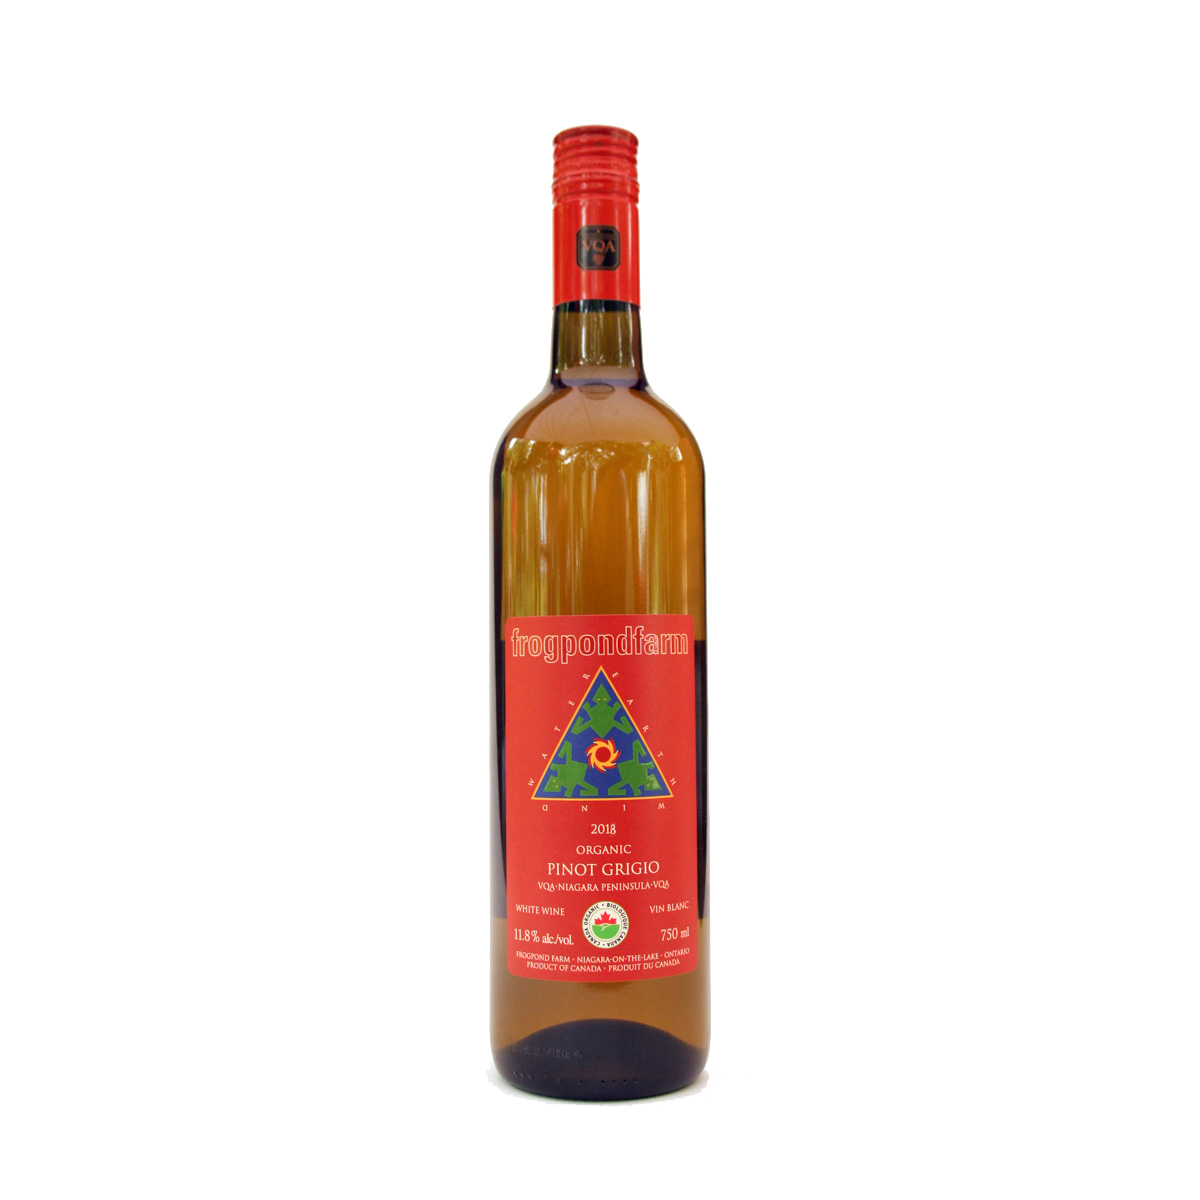 Frogpond Farm | Single bottle of Frogpond Farm certified organic 2018 Pinot Grigio wine on a white background.